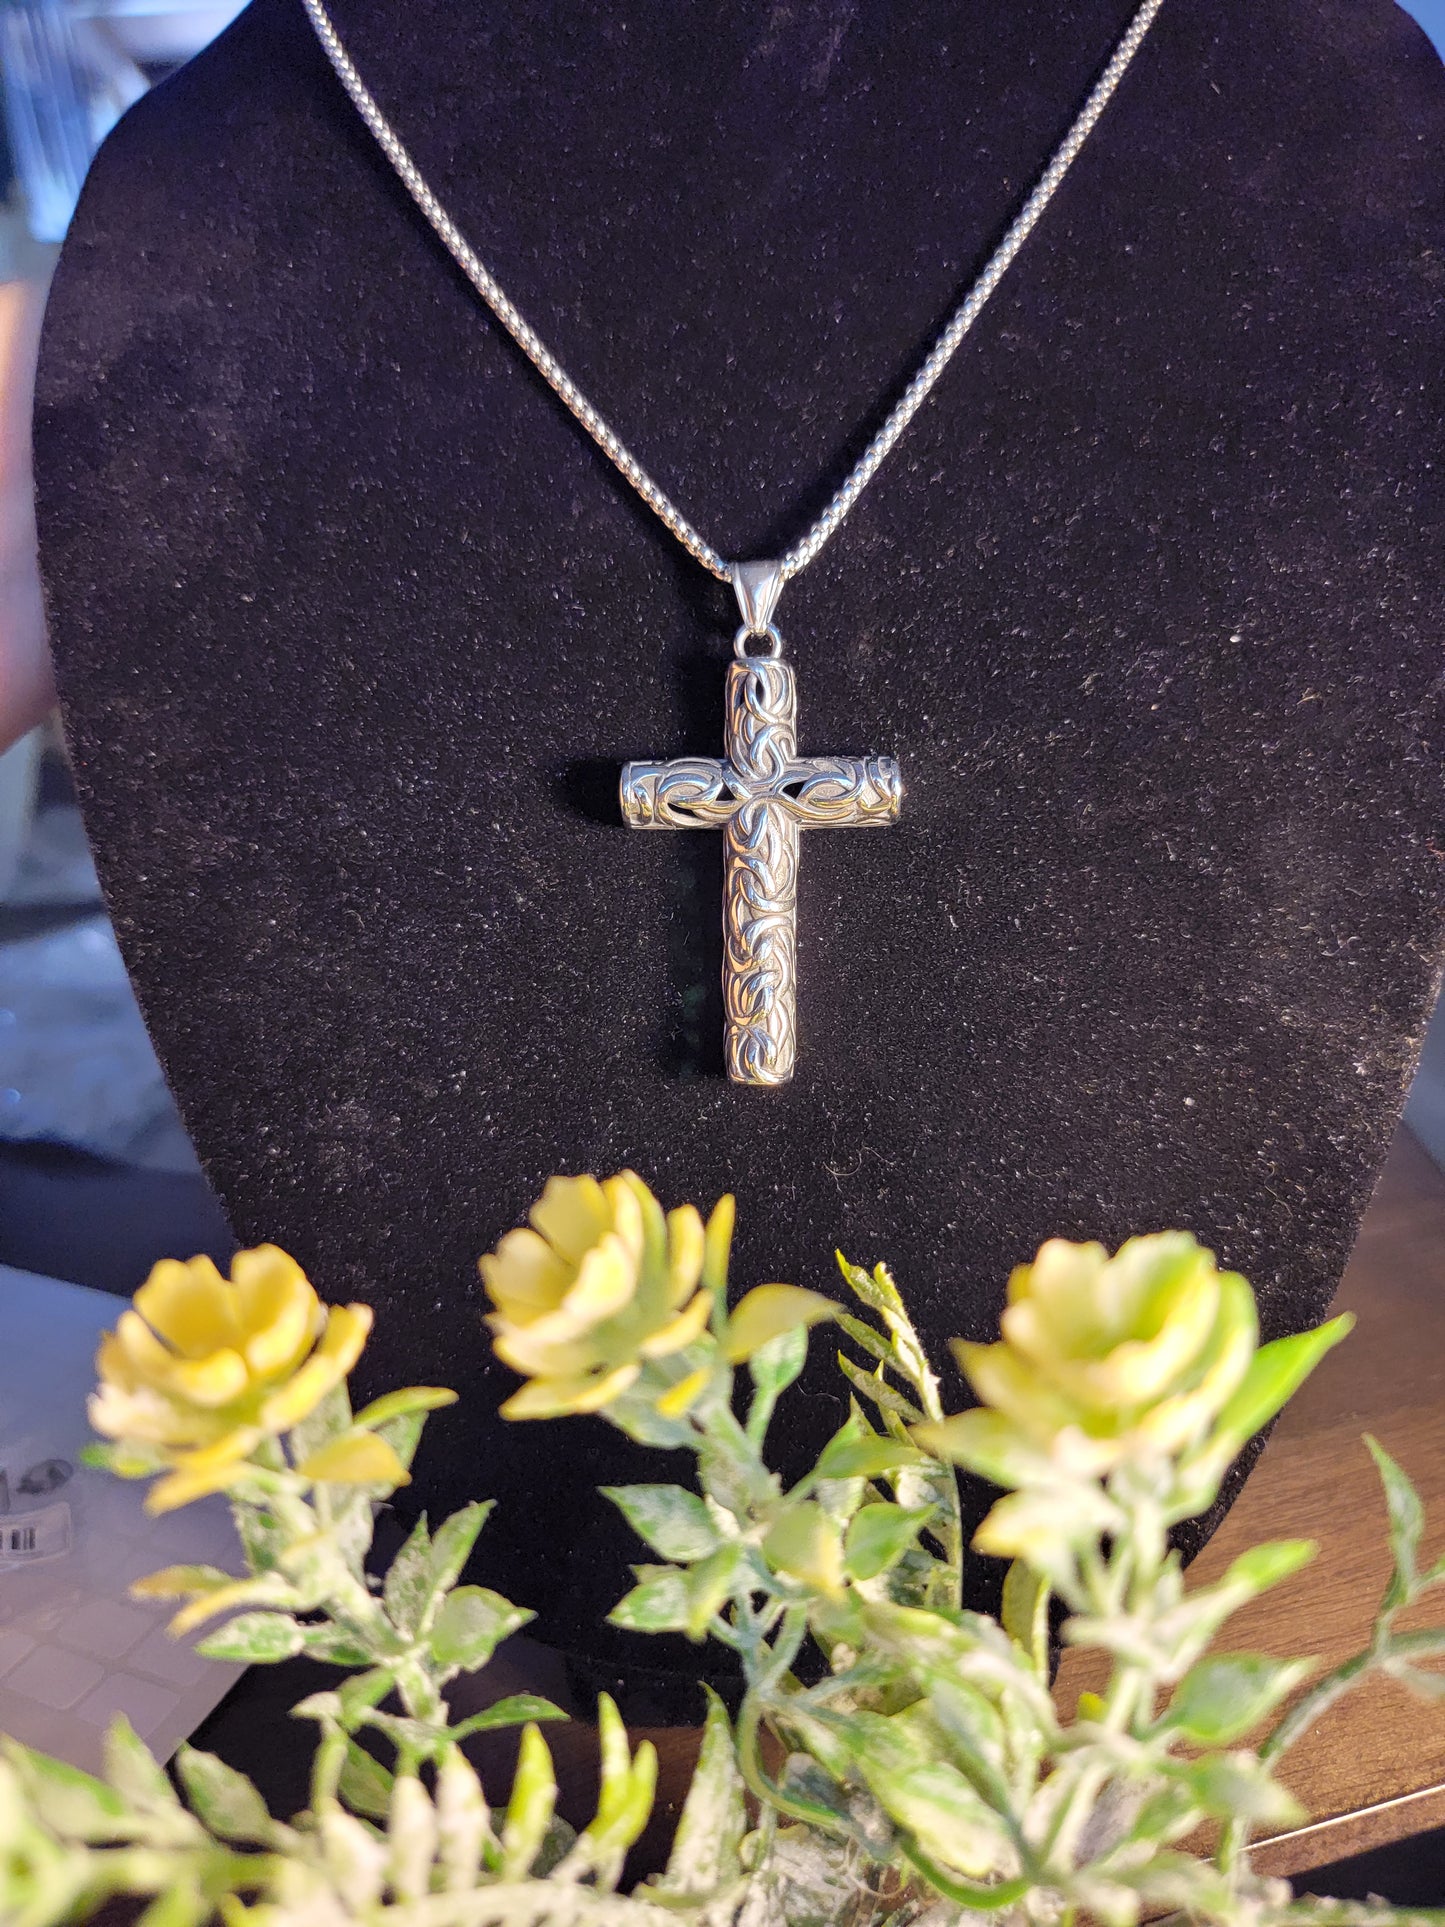 Celtic Knot Carved Cross Necklace